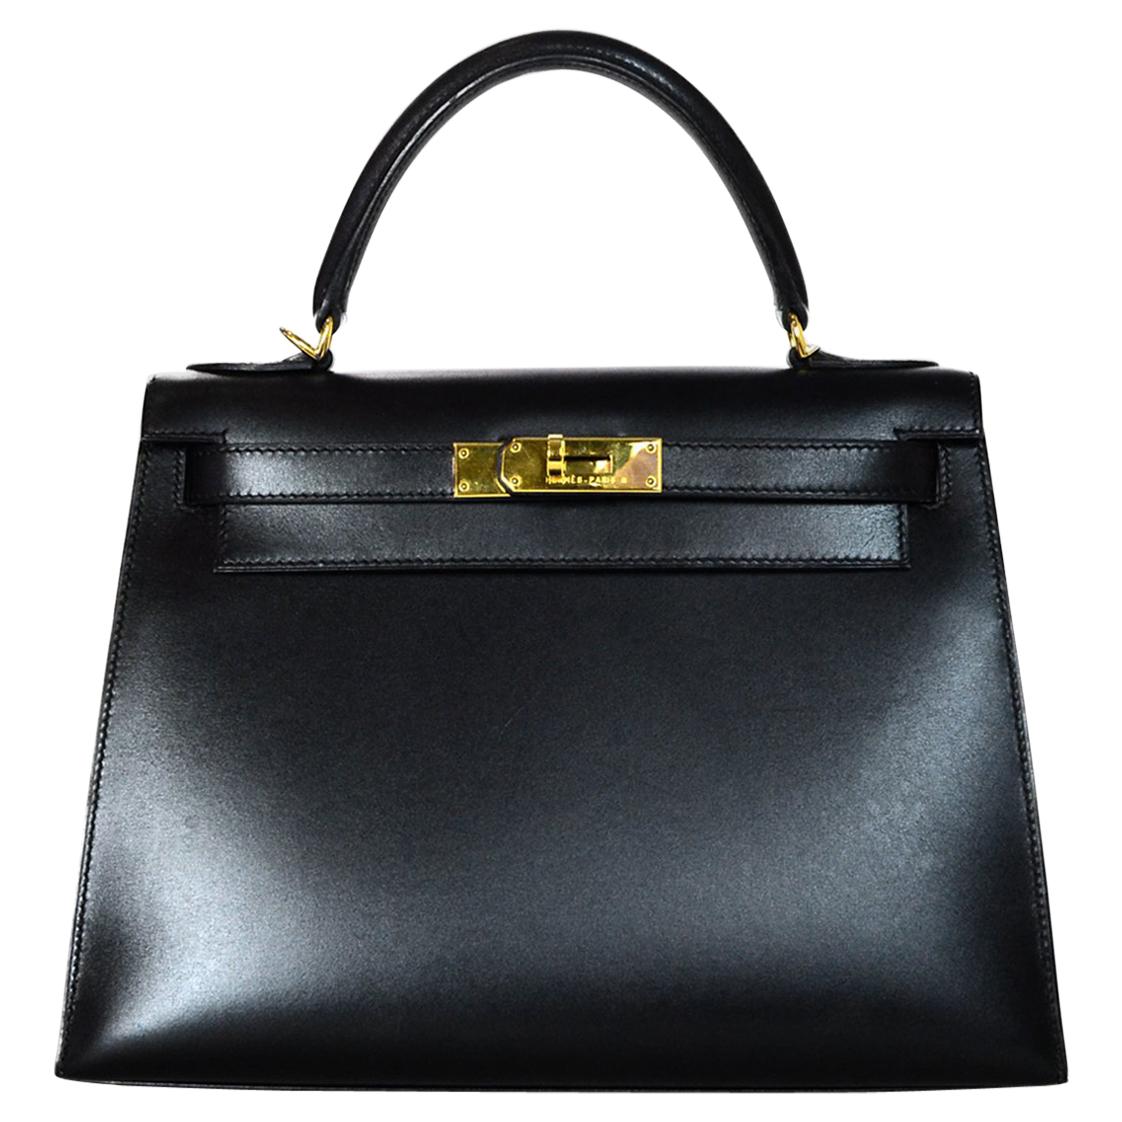 Hermes 2001 Black Box Leather 28cm Rigid Sellier Kelly Bag GHW